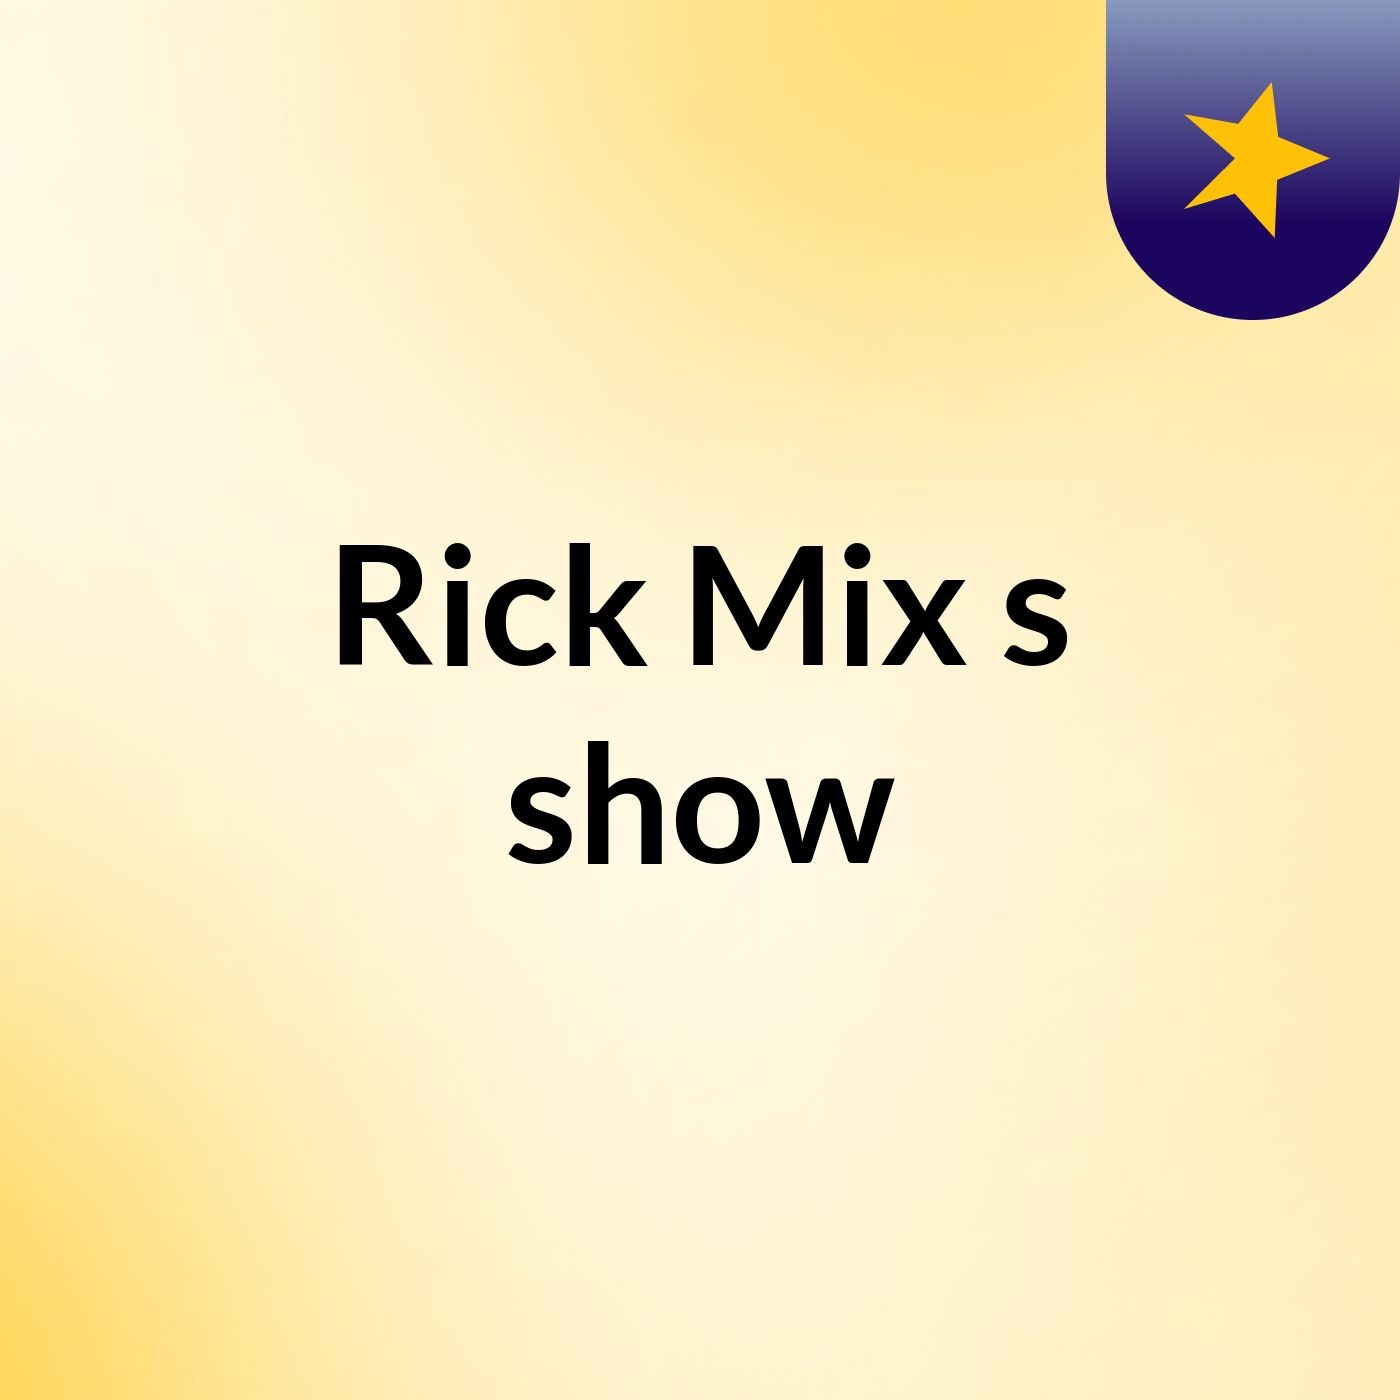 Rick Mix's show